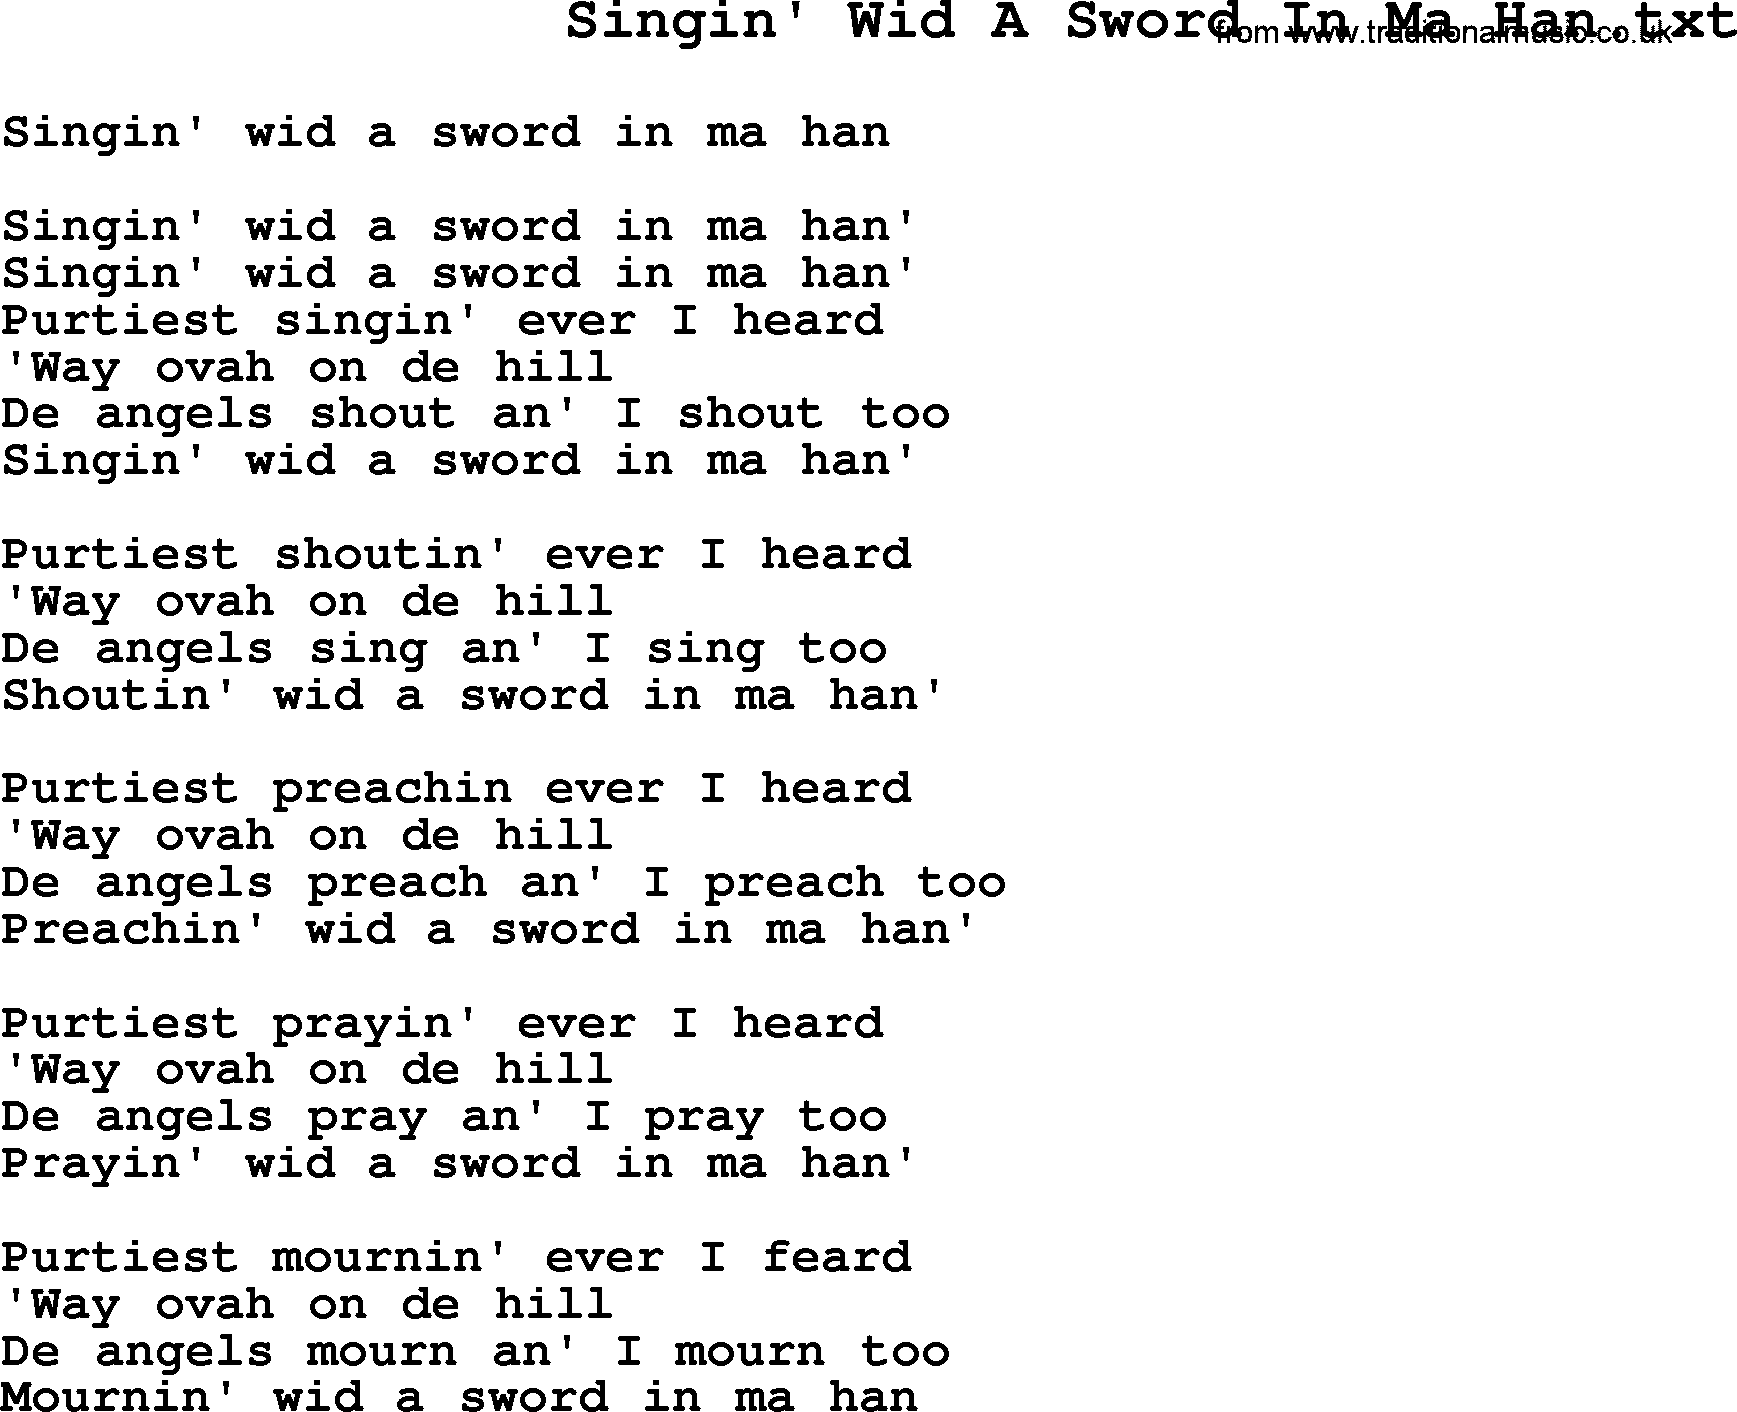 Negro Spiritual Song Lyrics for Singin' Wid A Sword In Ma Han